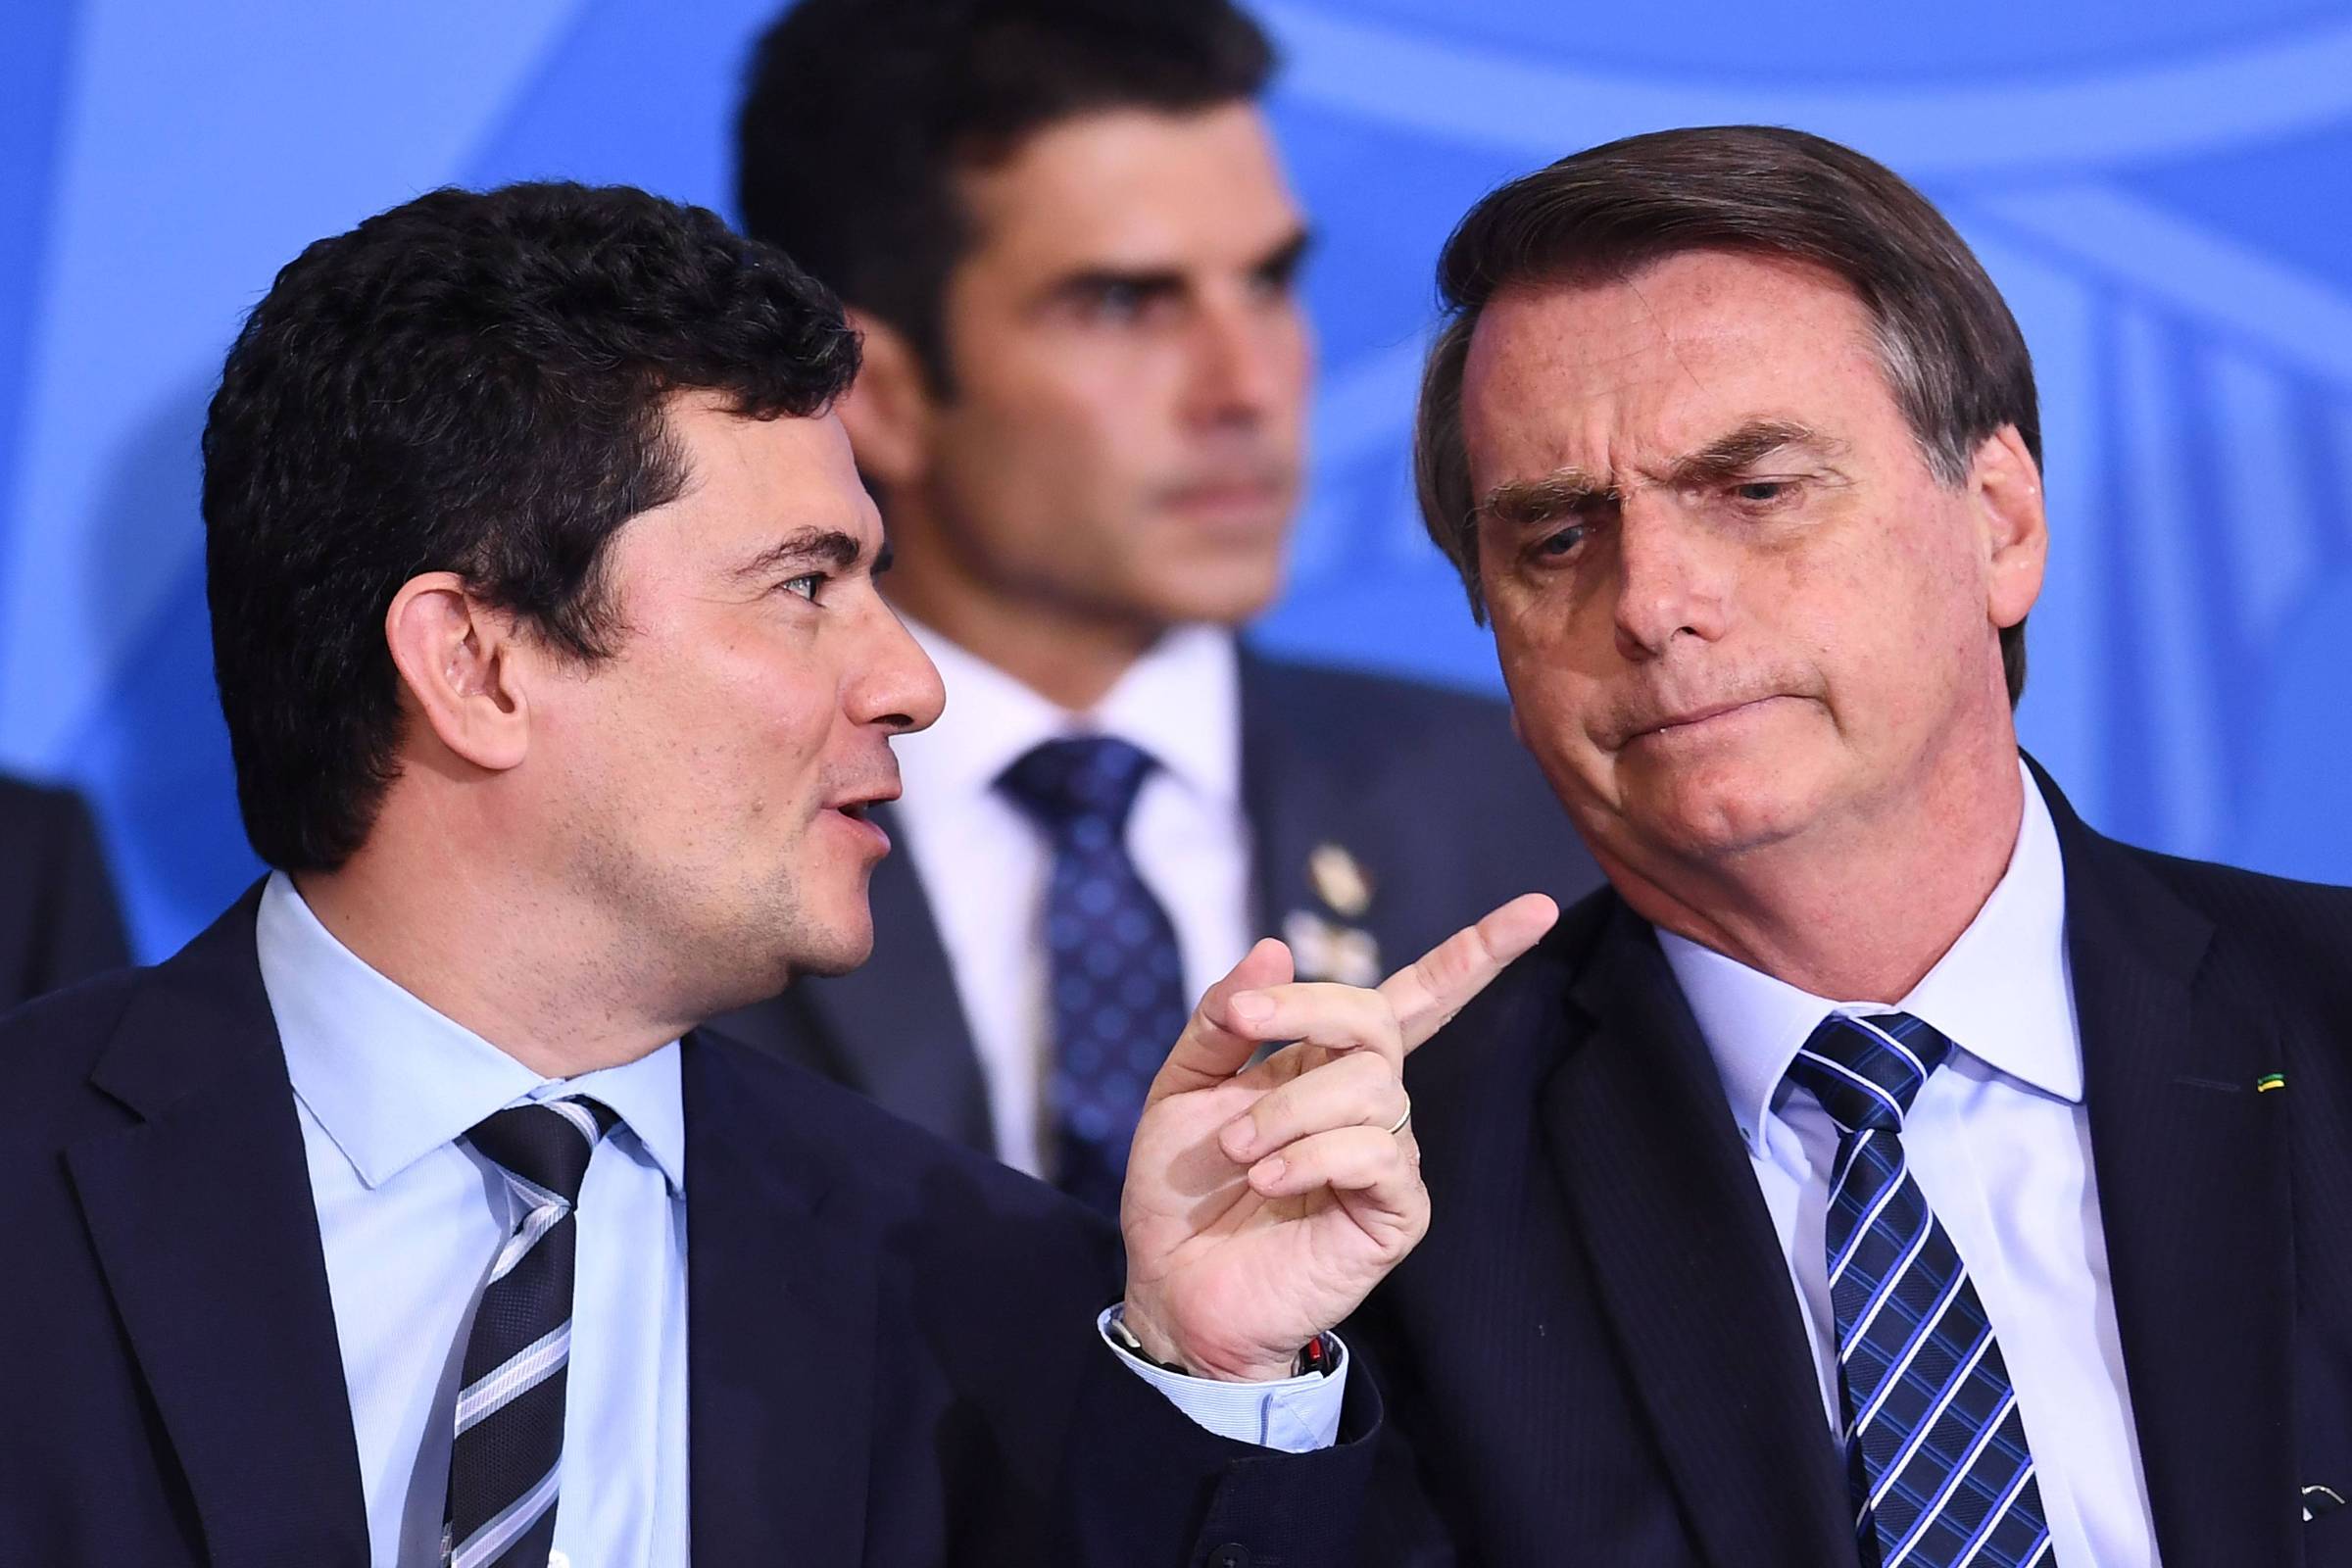 Bolsonaro afirma que, no xadrez do governo, a dama é a PGR